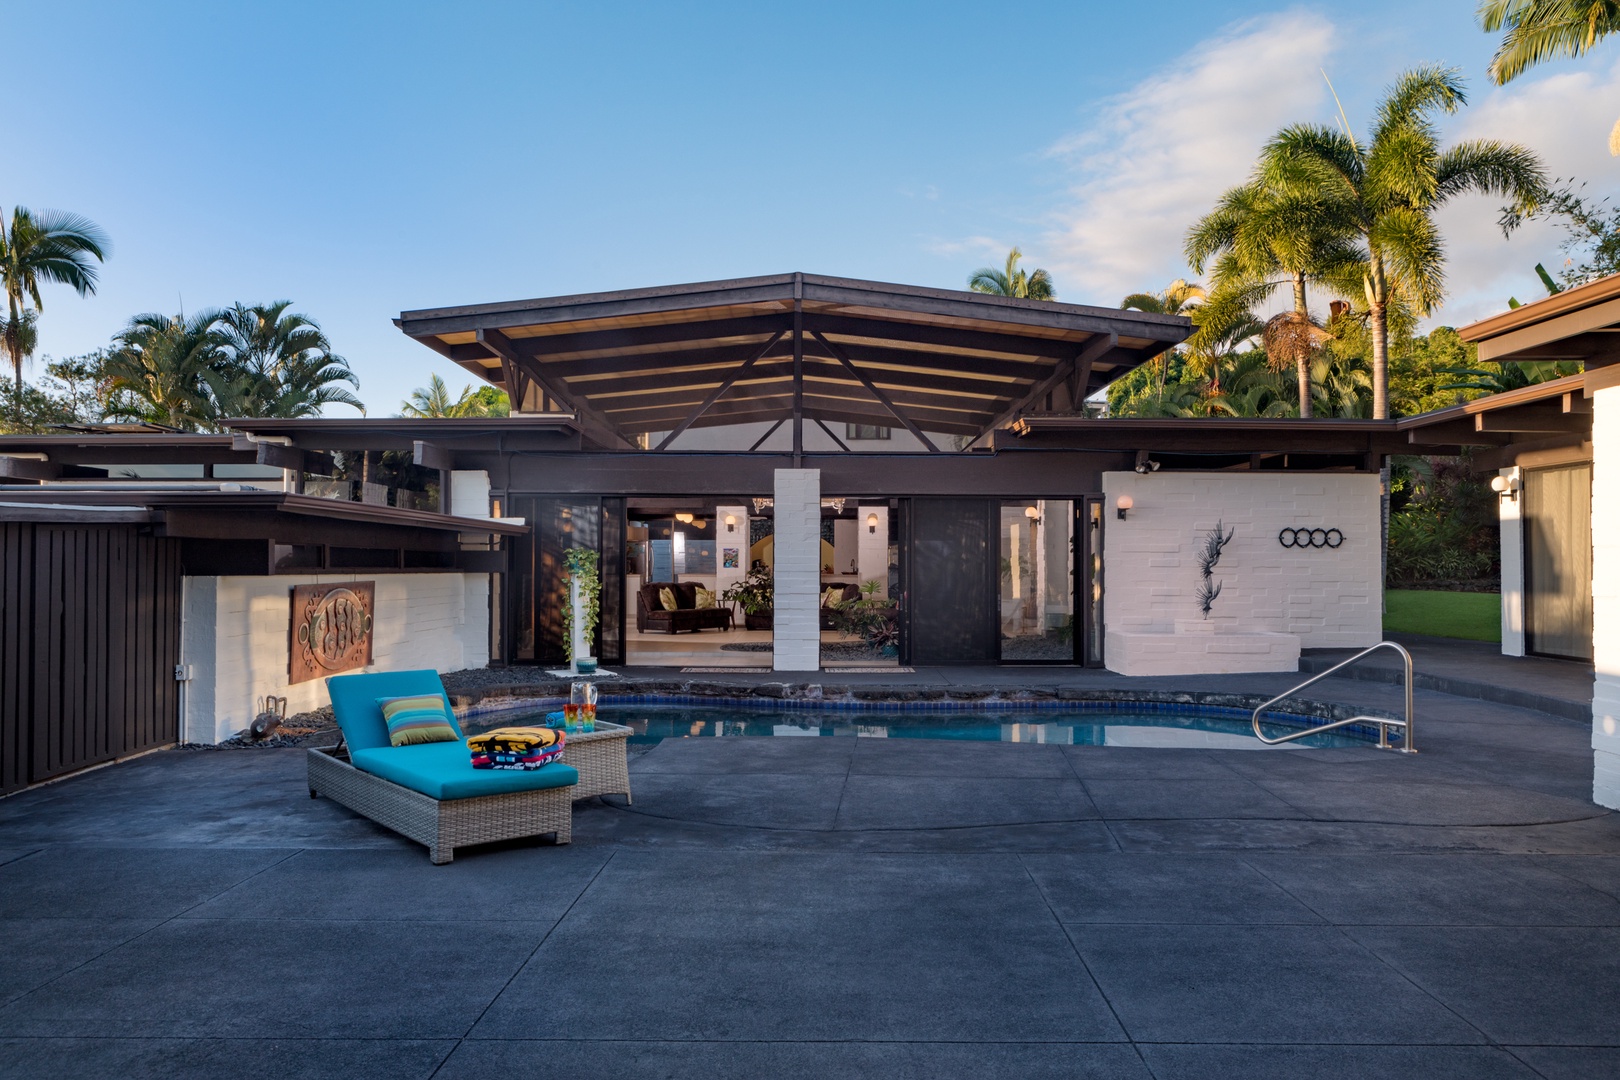 Kailua Kona Vacation Rentals, Ono Oasis - Luxurious Private Pool